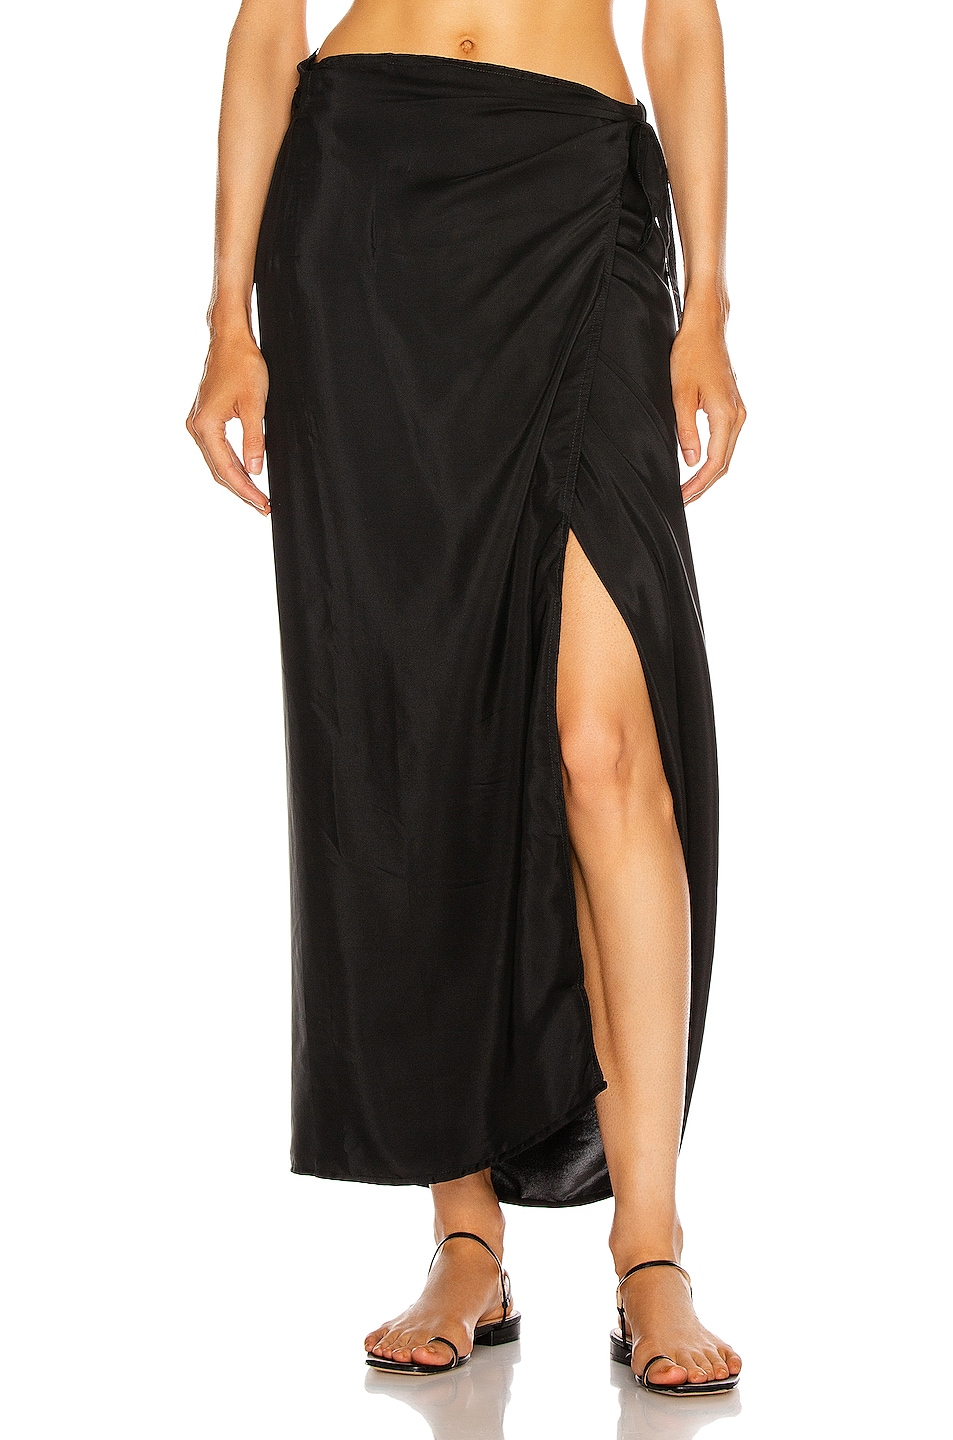 Image 1 of Natalie Martin Talia Skirt in Black